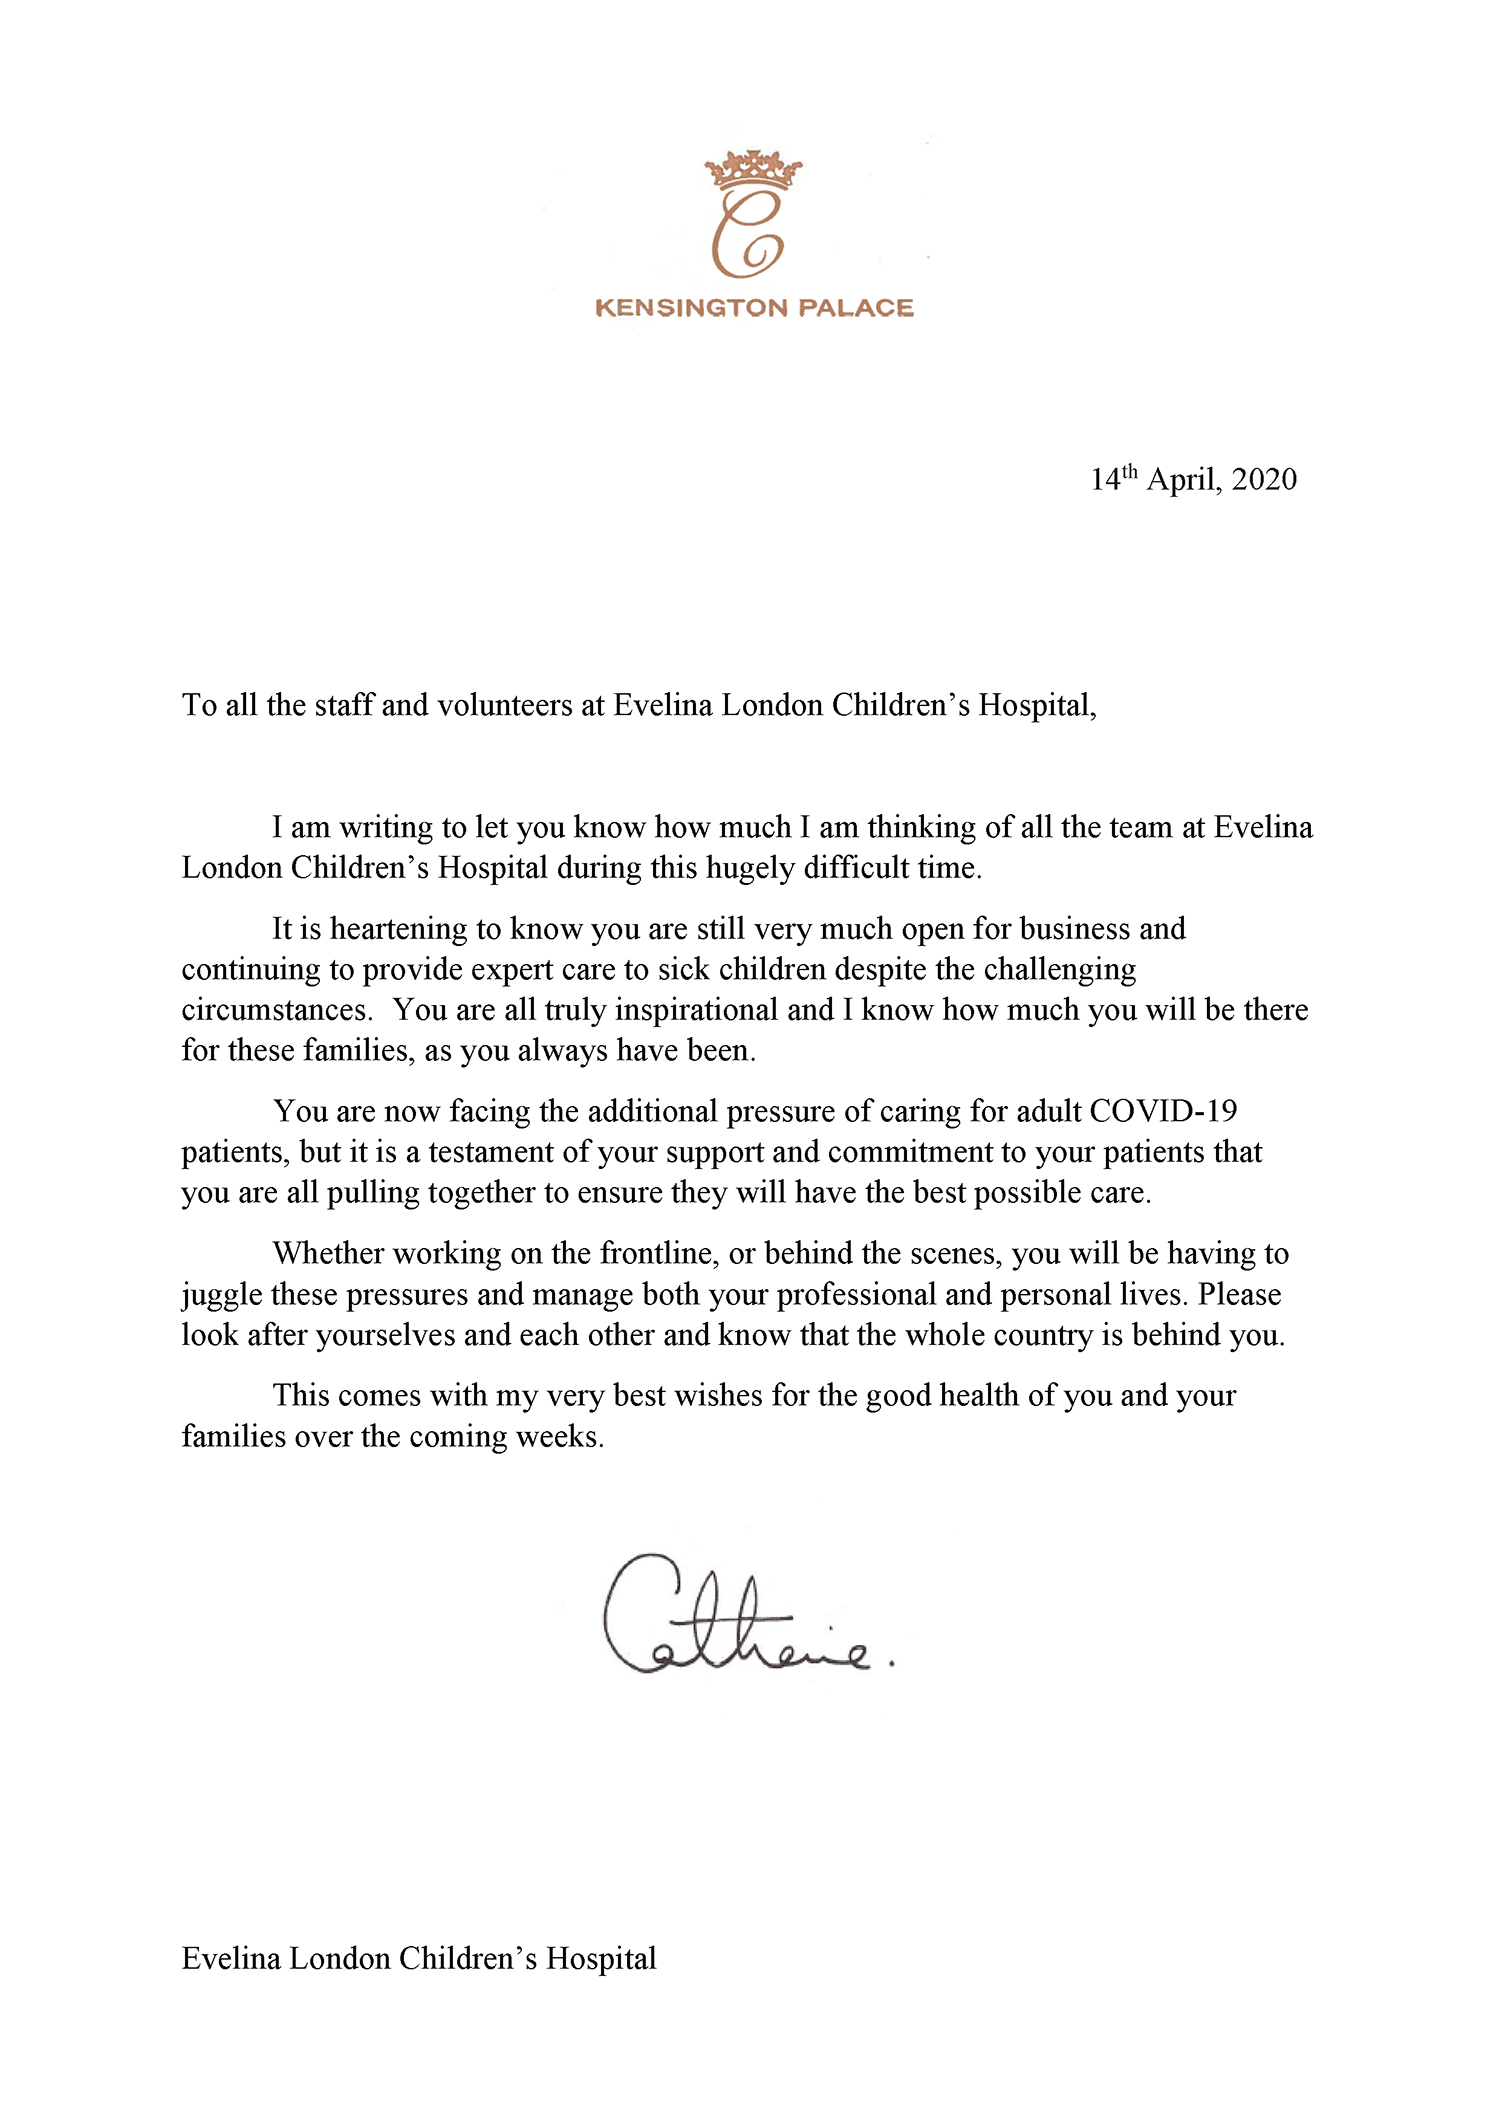 Duchess of Cambridge’s message to ‘inspirational’ Evelina staff